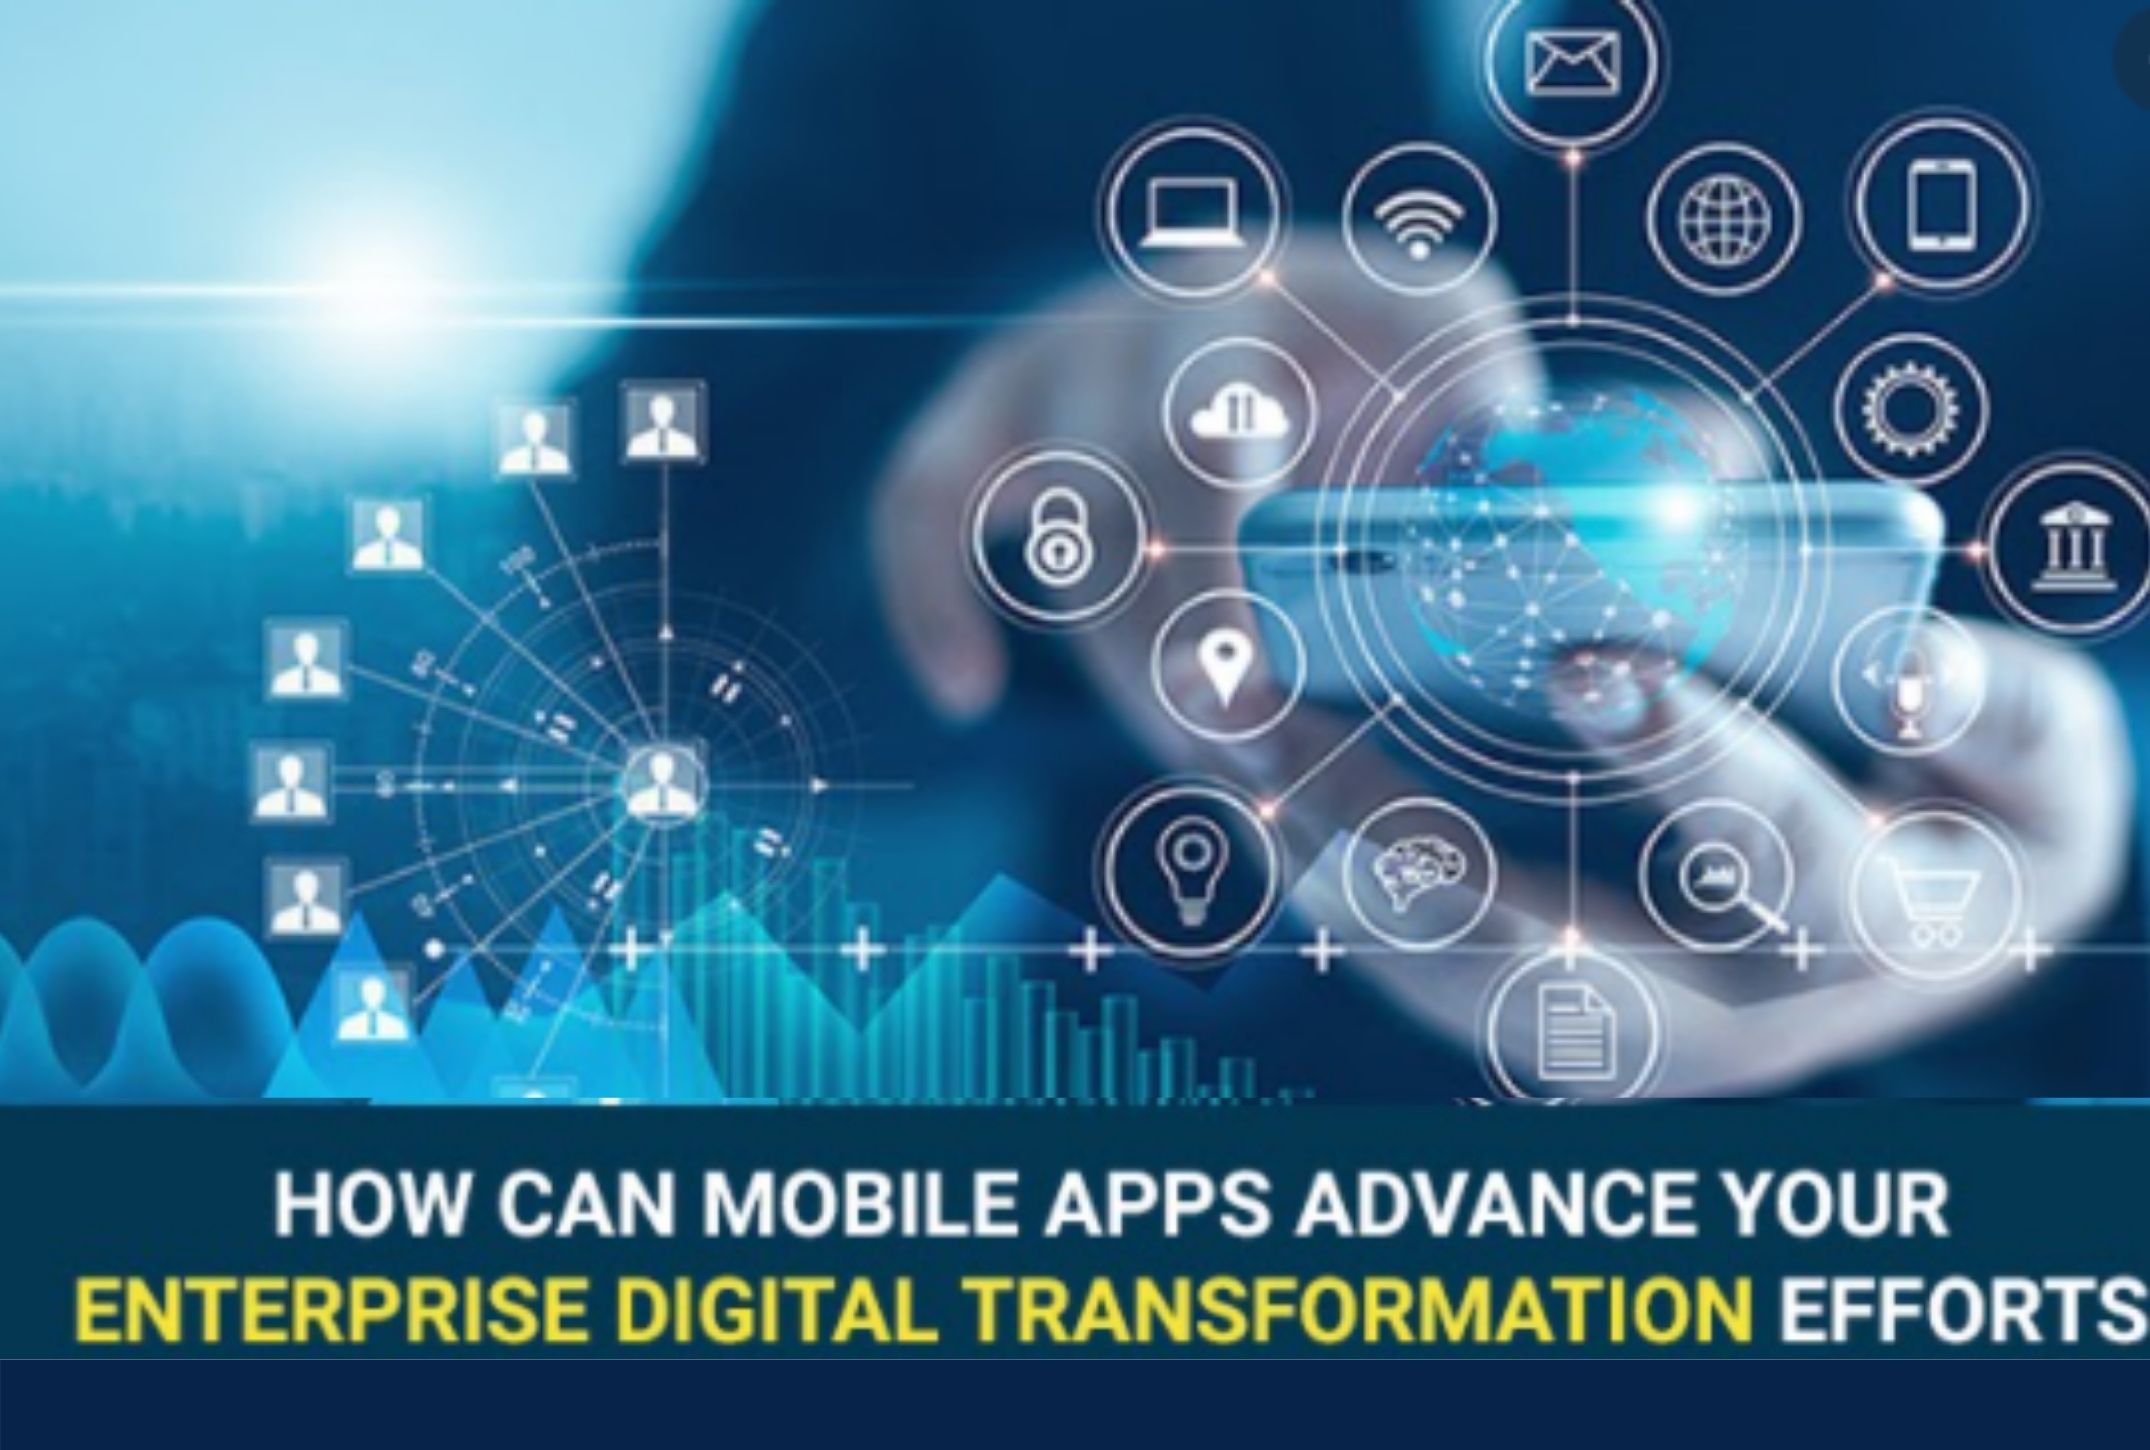 Advance Enterprise Digital Transformation Efforts By Mobile Apps